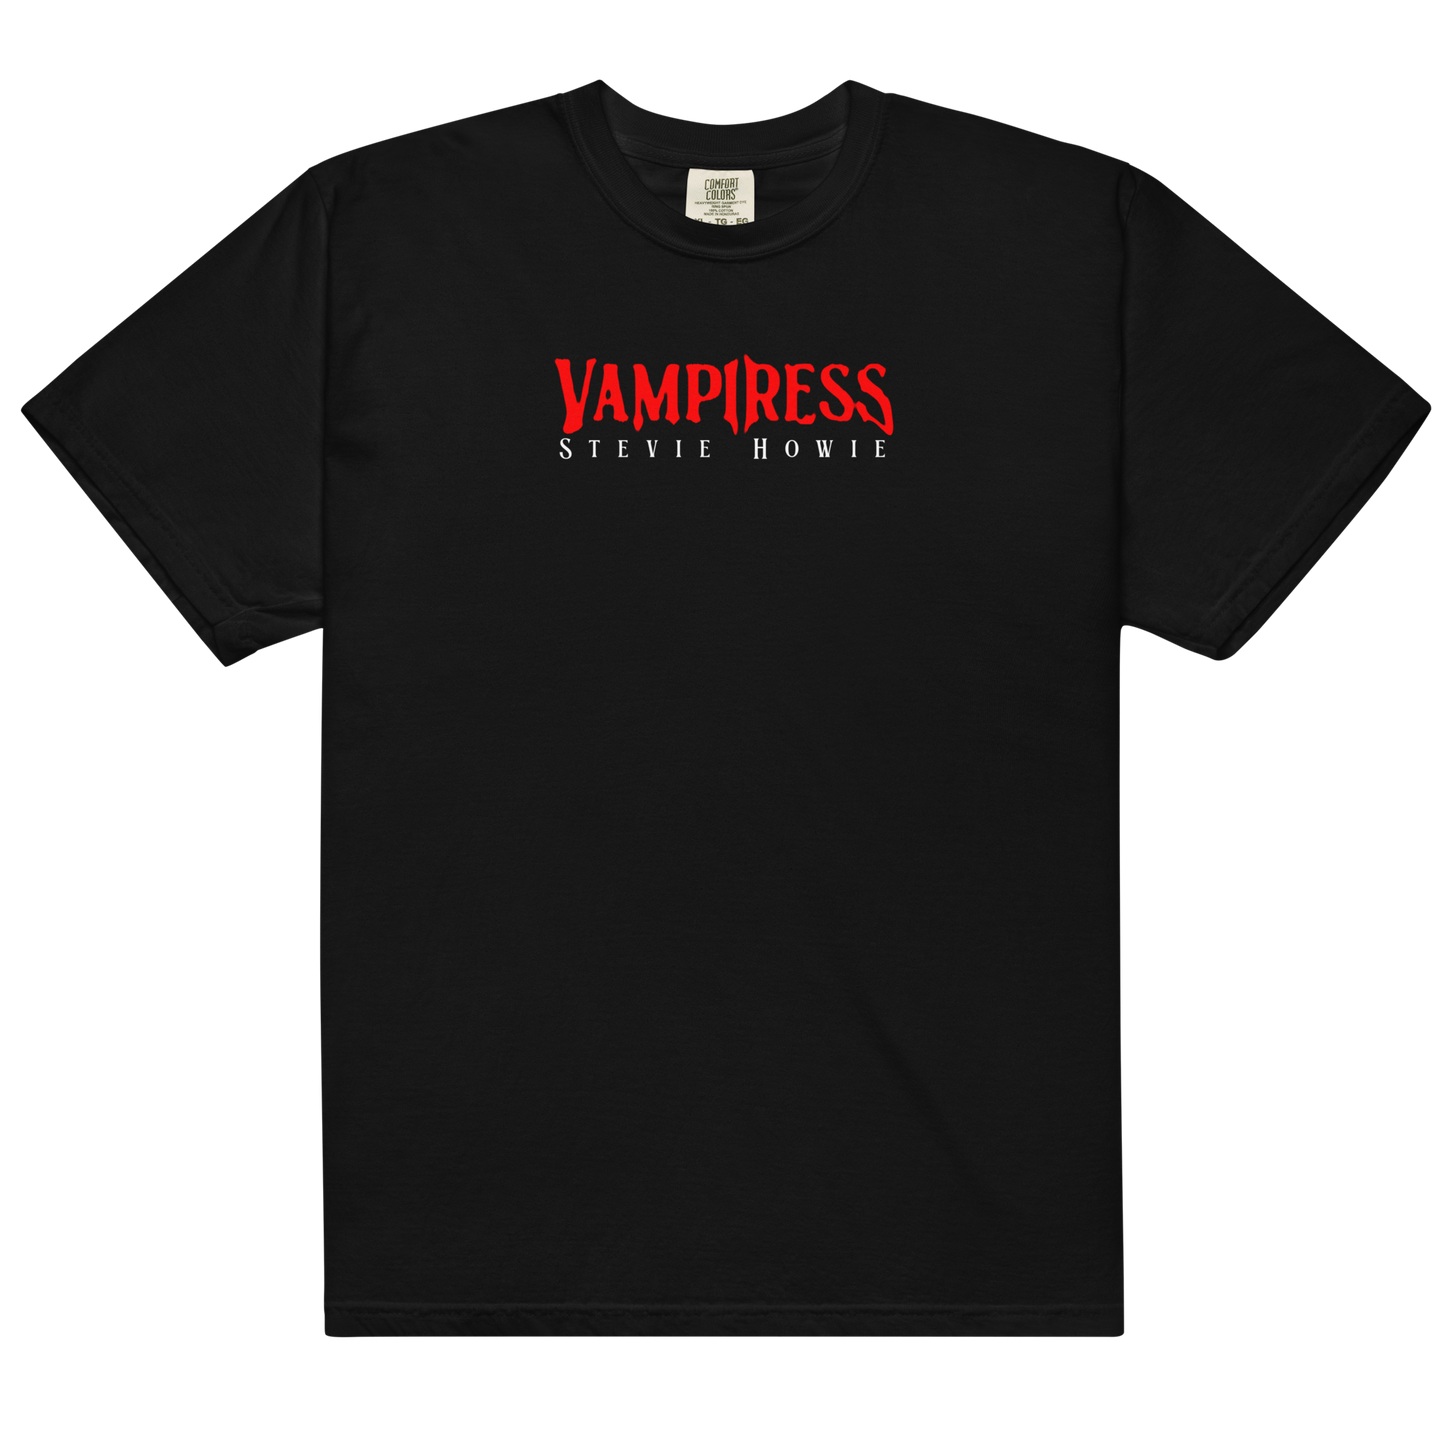 LIMITED EDITION "vampiress" T-Shirt